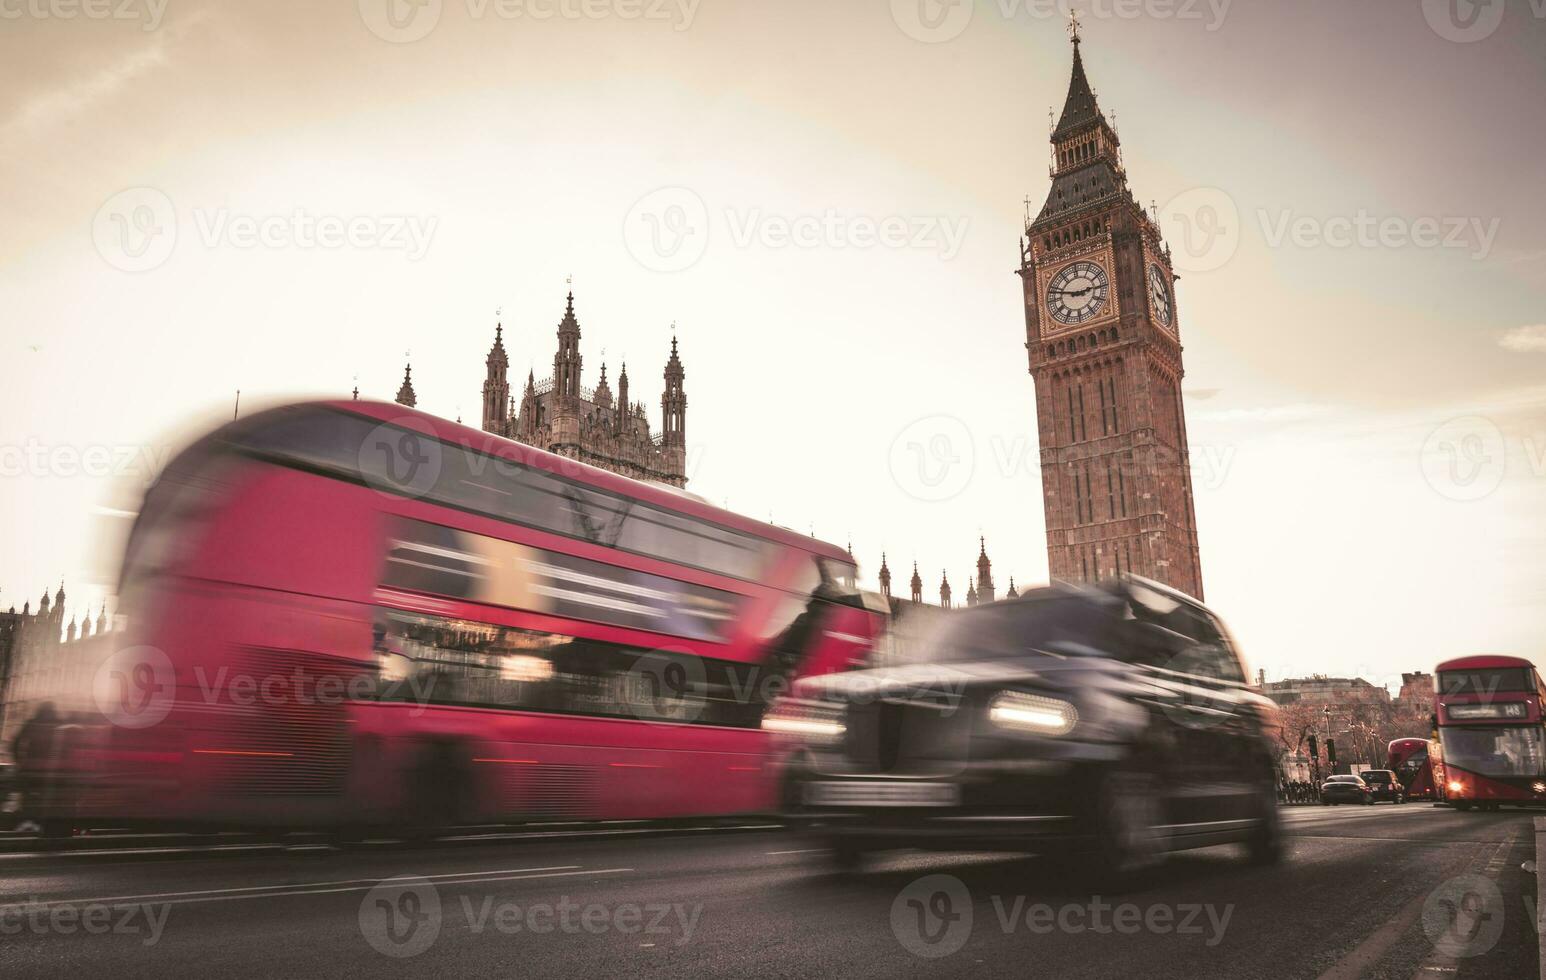 groot ben. rood bus. Brits taxi. Westminster brug. foto